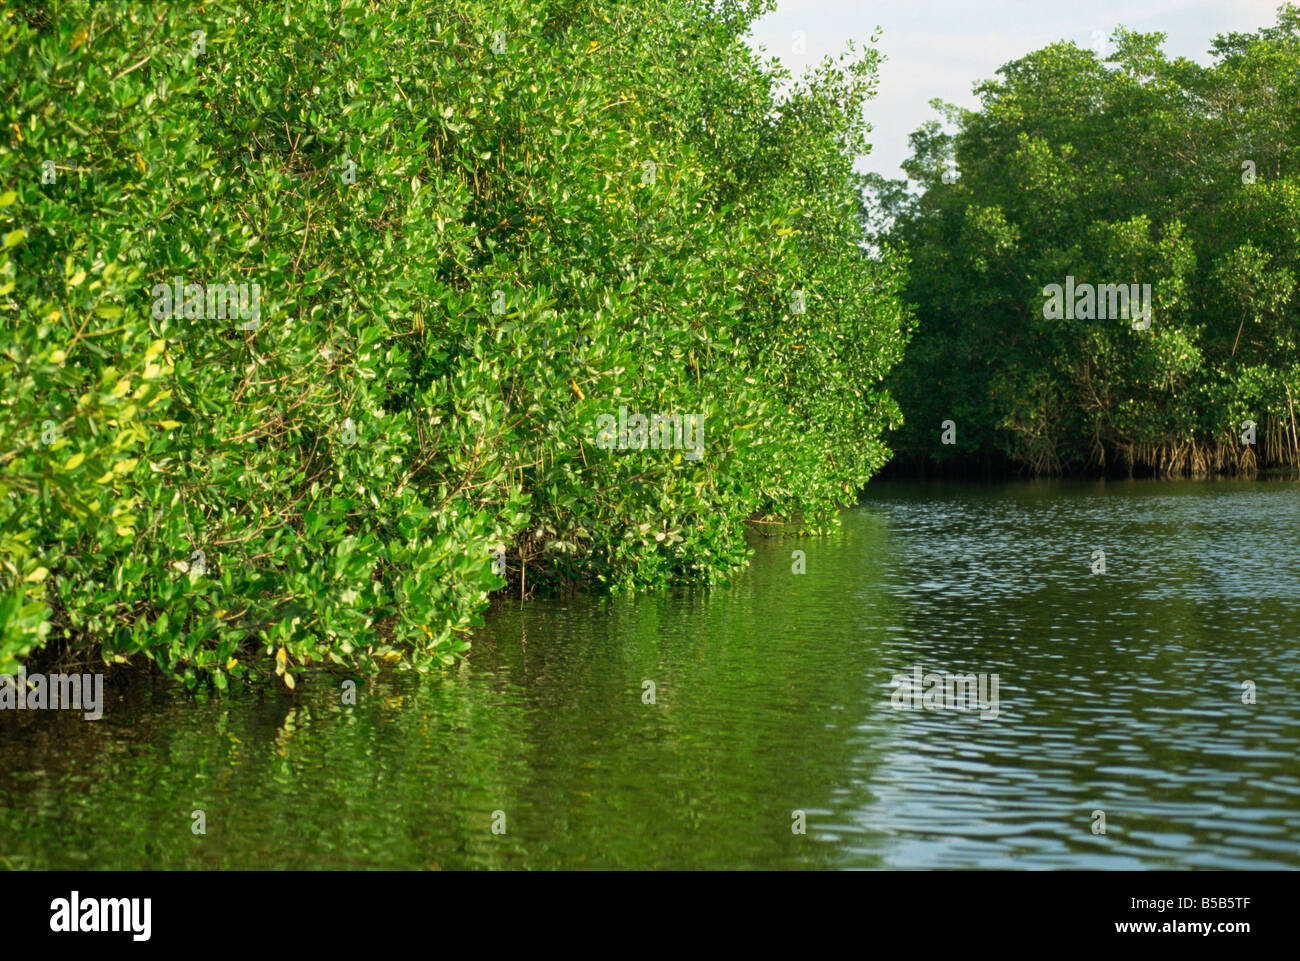 Caroni Mangrovensumpf und Nature Reserve Trinidad West Indies Karibik Mittelamerika Stockfoto